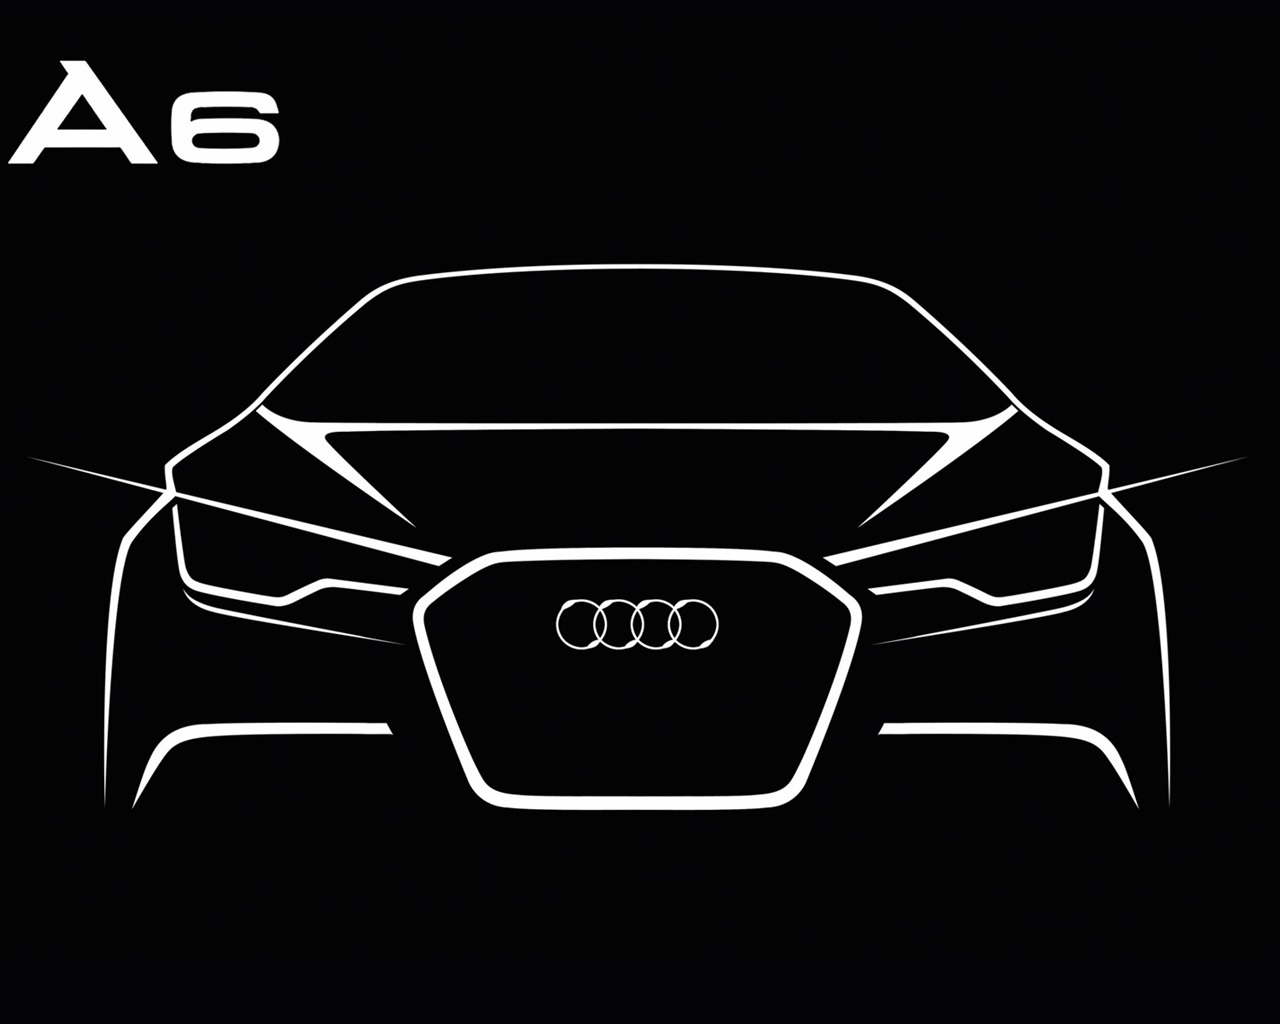 Audi A6 3.0 TDI quattro - 2011 奧迪 #28 - 1280x1024